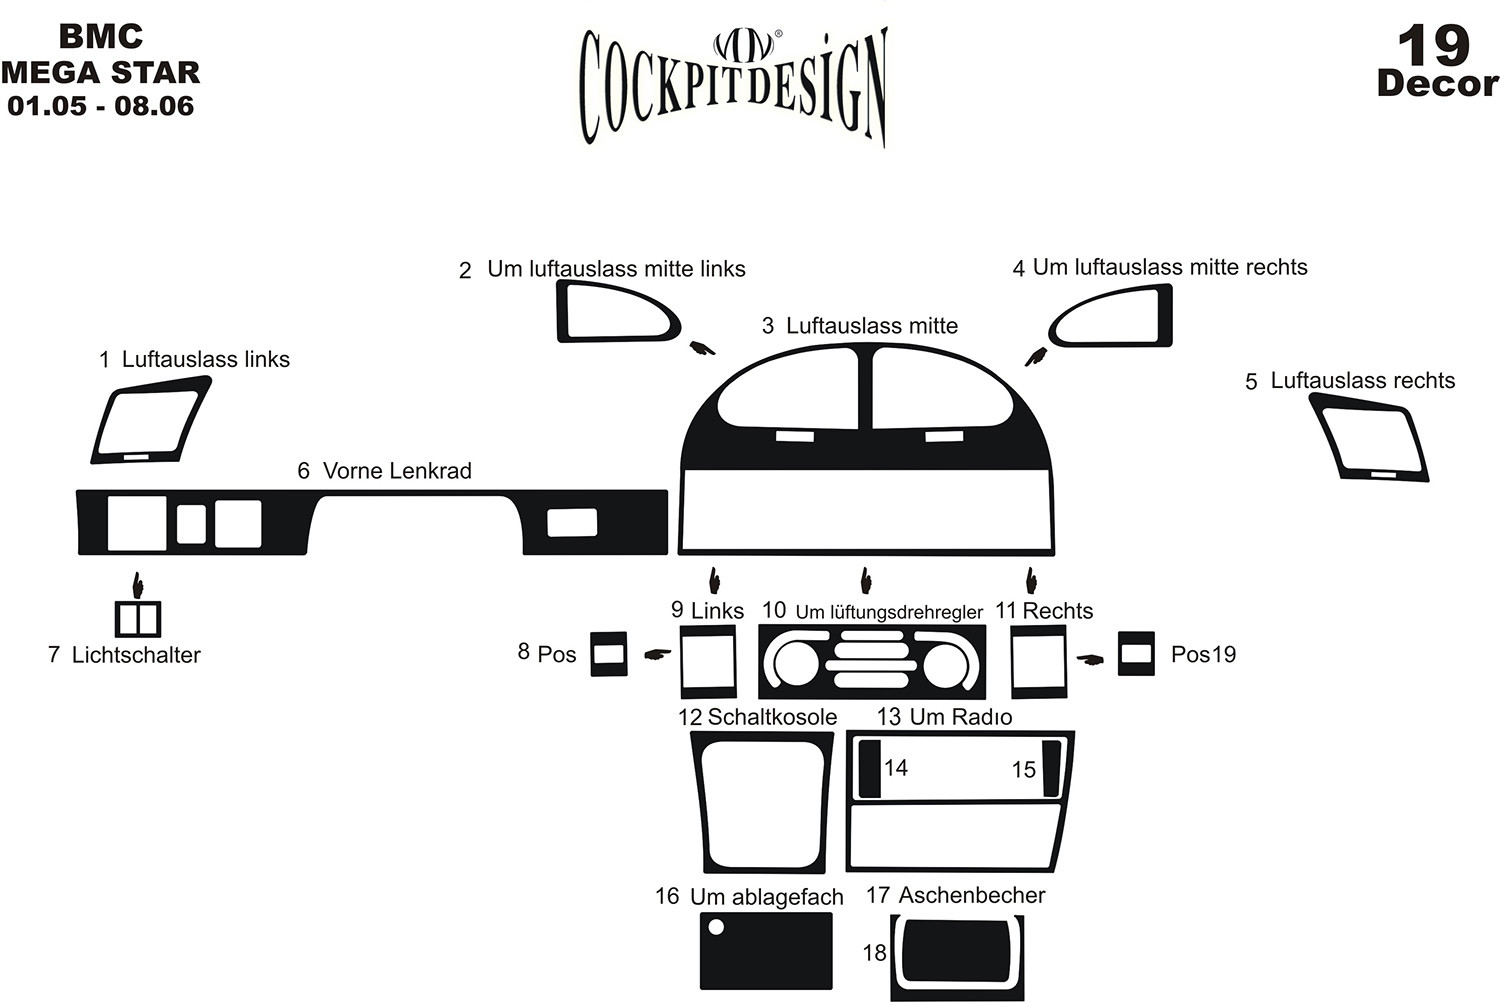 3D Cockpit Dekor für BMC MEGASTAR 2005-2006 19 Teile